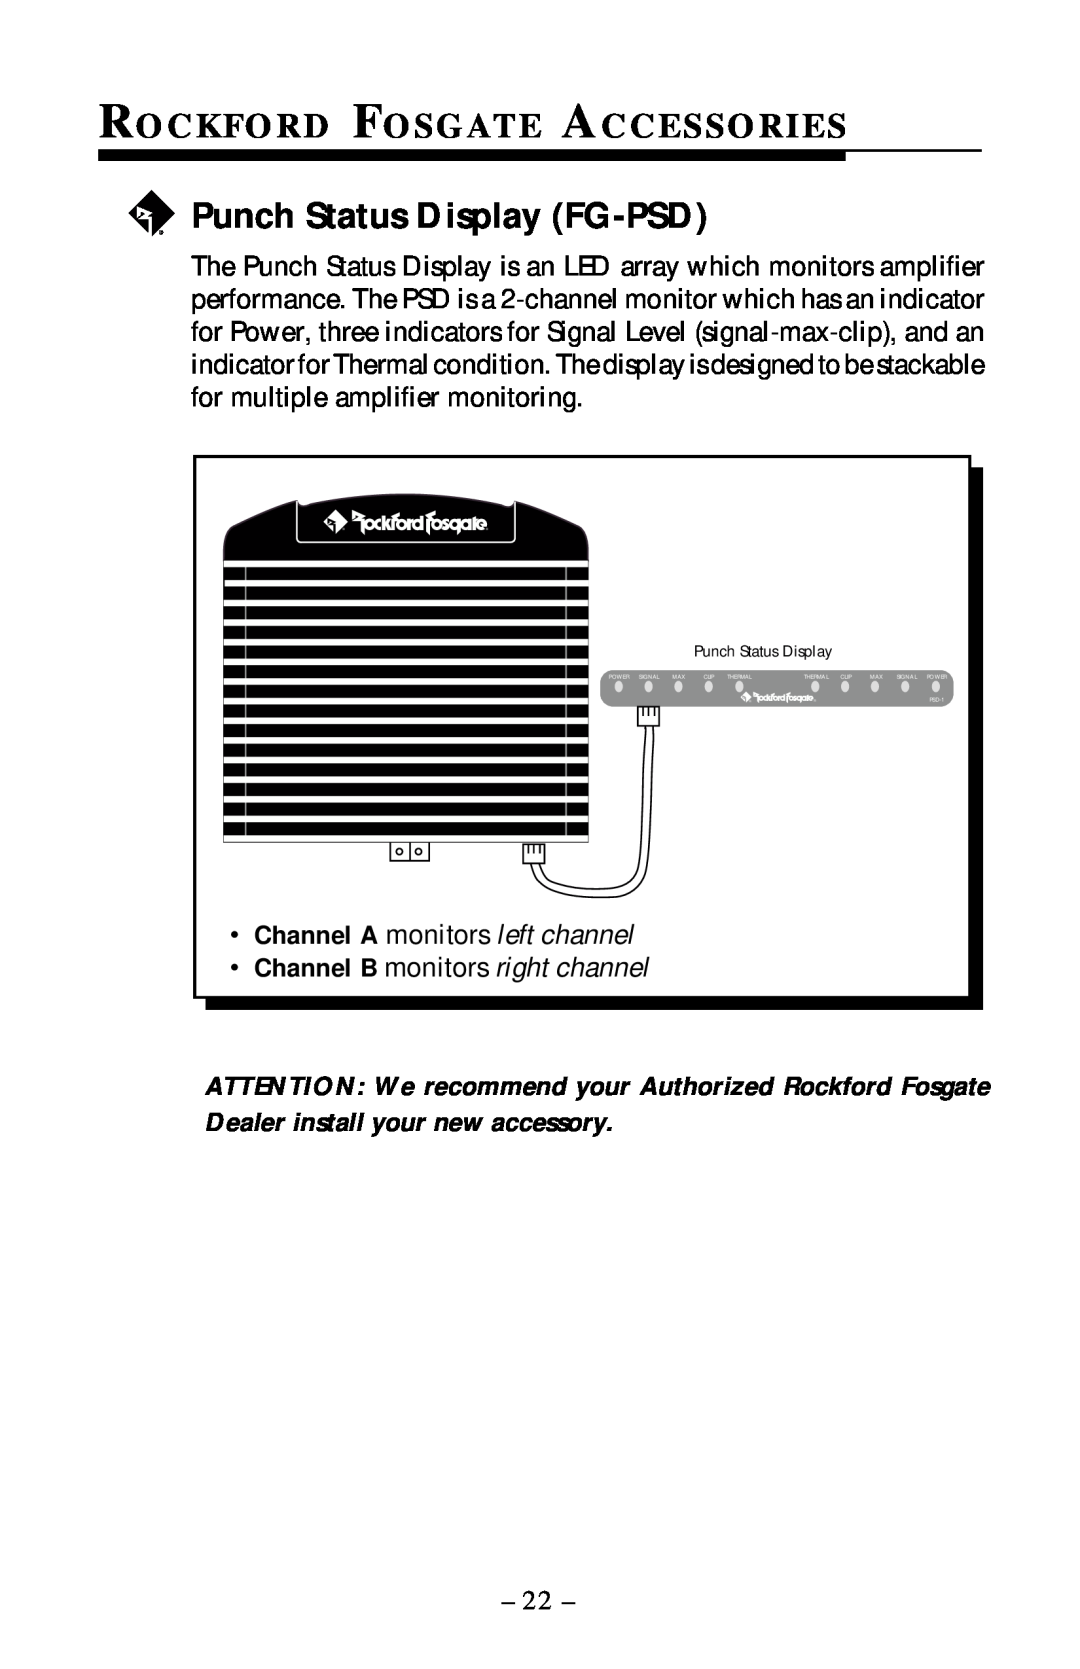 Rockford Fosgate 40X2 manual Punch Status Display FG-PSD, Ro C K F O R D Fo S G At E Ac C E S S O R I E S 